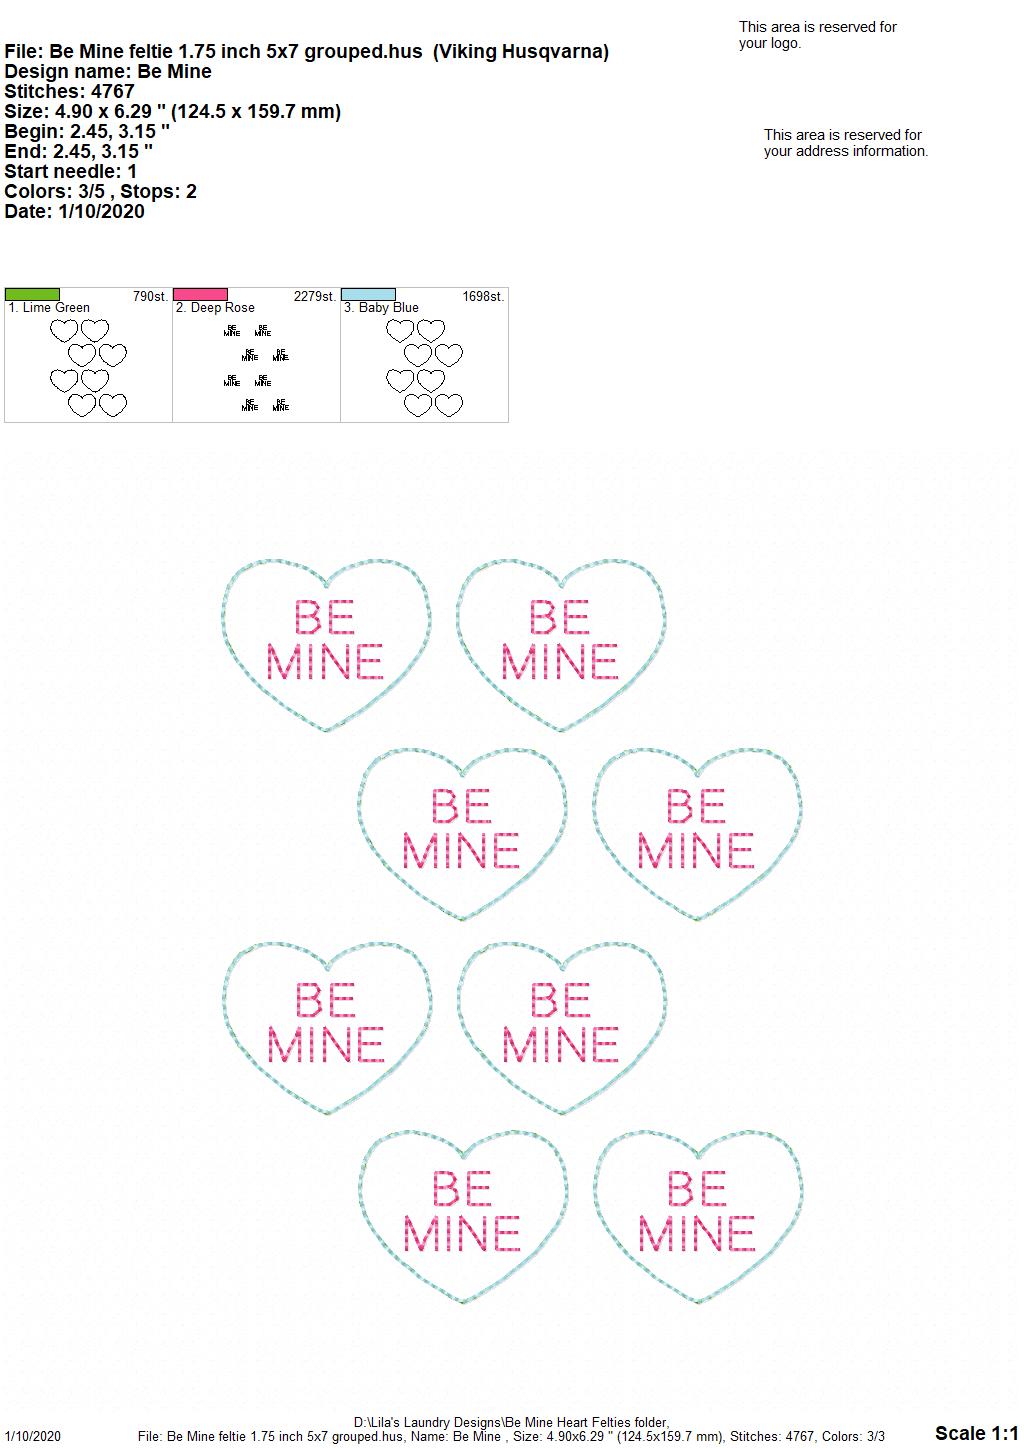 Be Mine Heart Felties - 3 sizes - Digital Embroidery Design